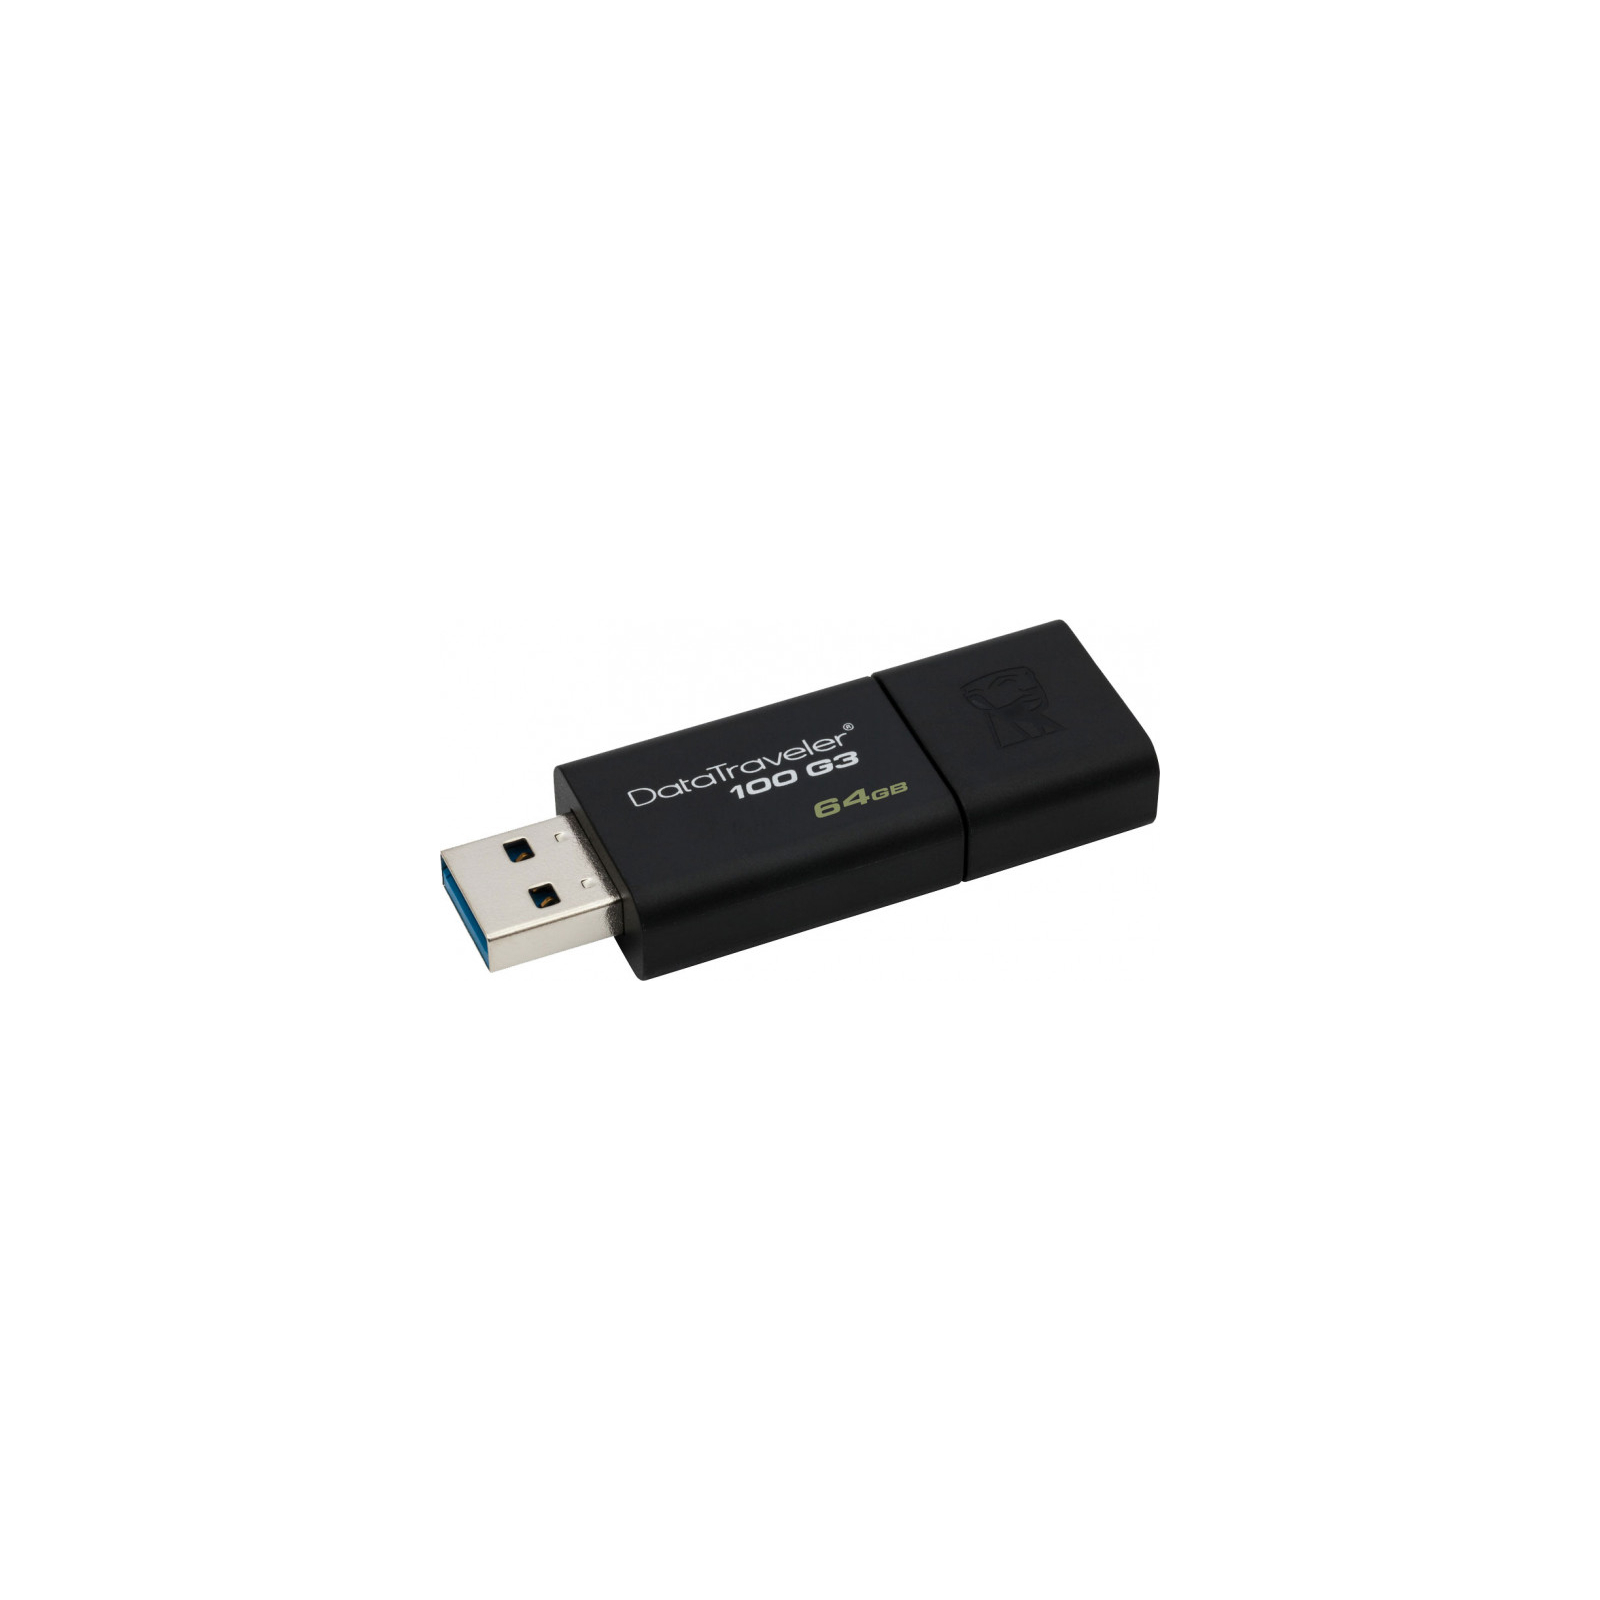 USB флеш накопитель Kingston 2x32GB DataTraveler 100 G3 USB 3.1 (DT100G3/32GB-2P) изображение 4